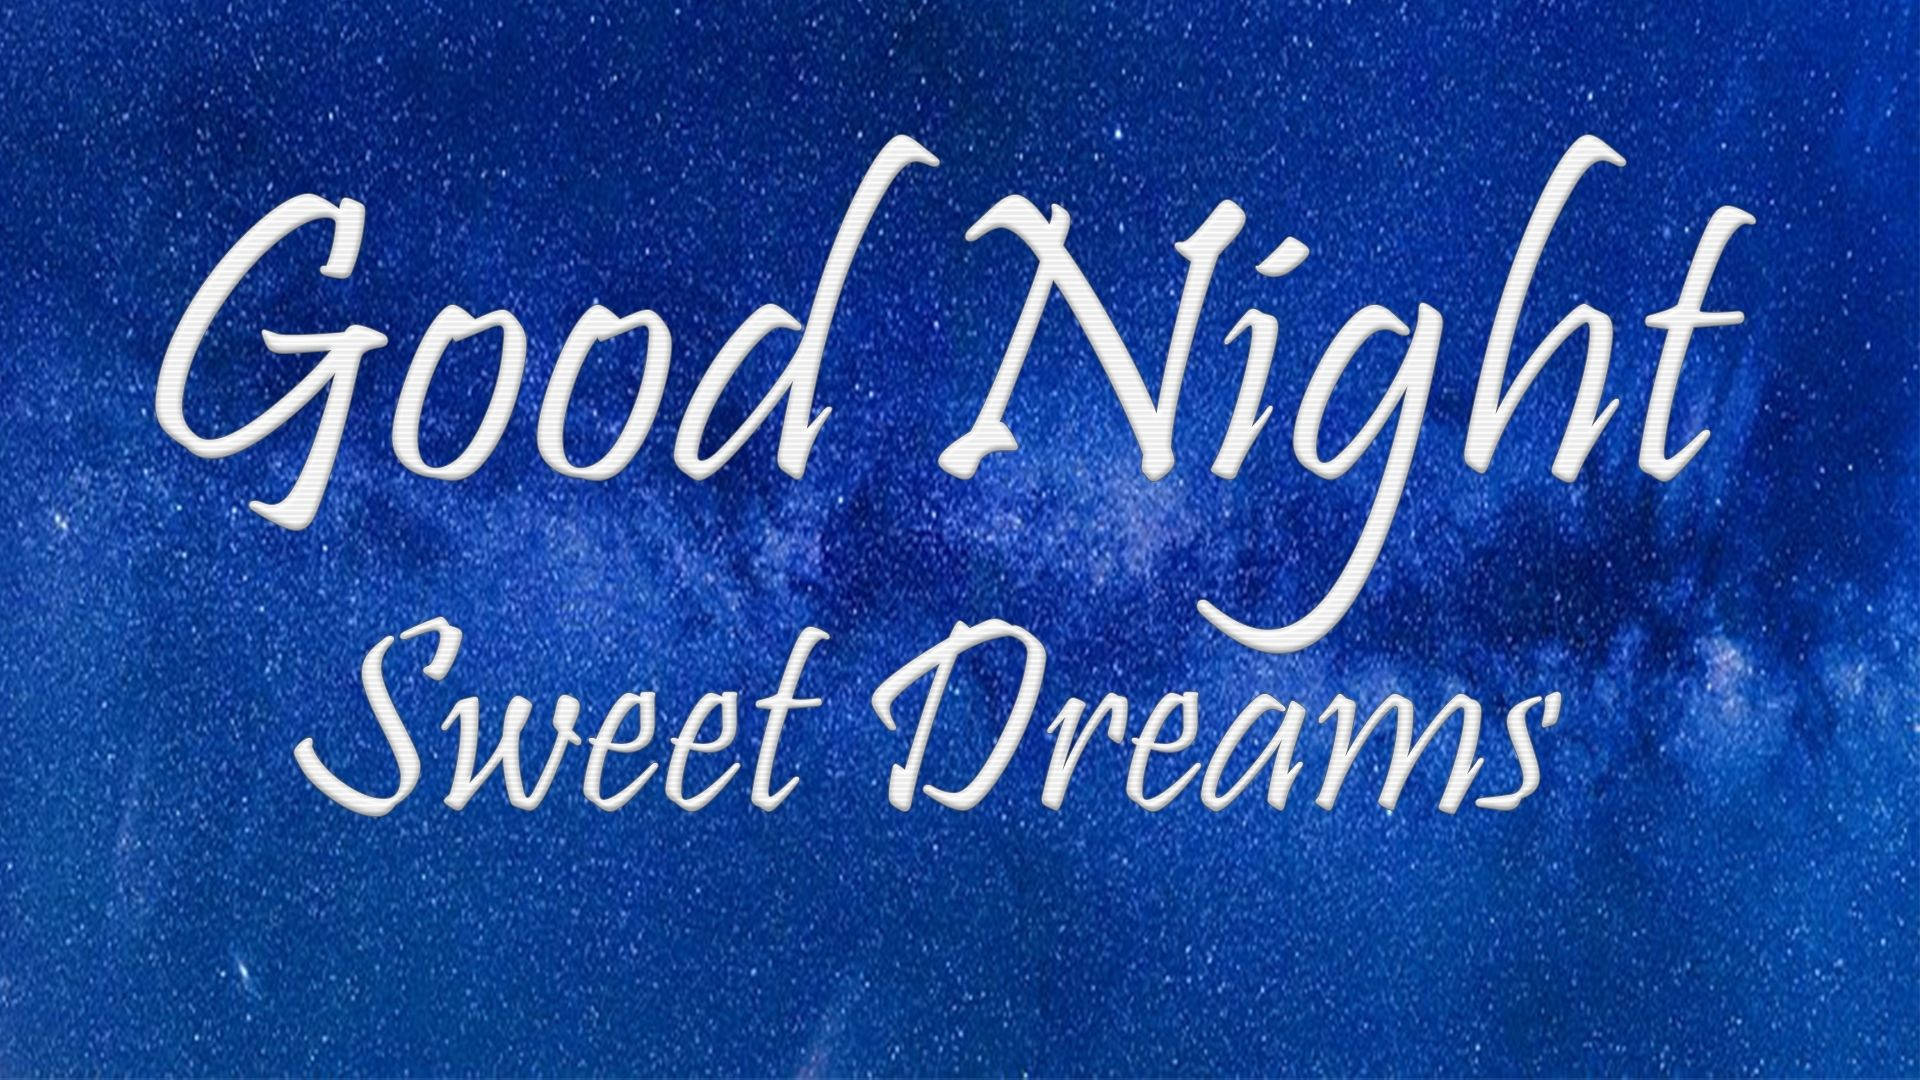 Sweet Dreams In Starry Night Sky Background